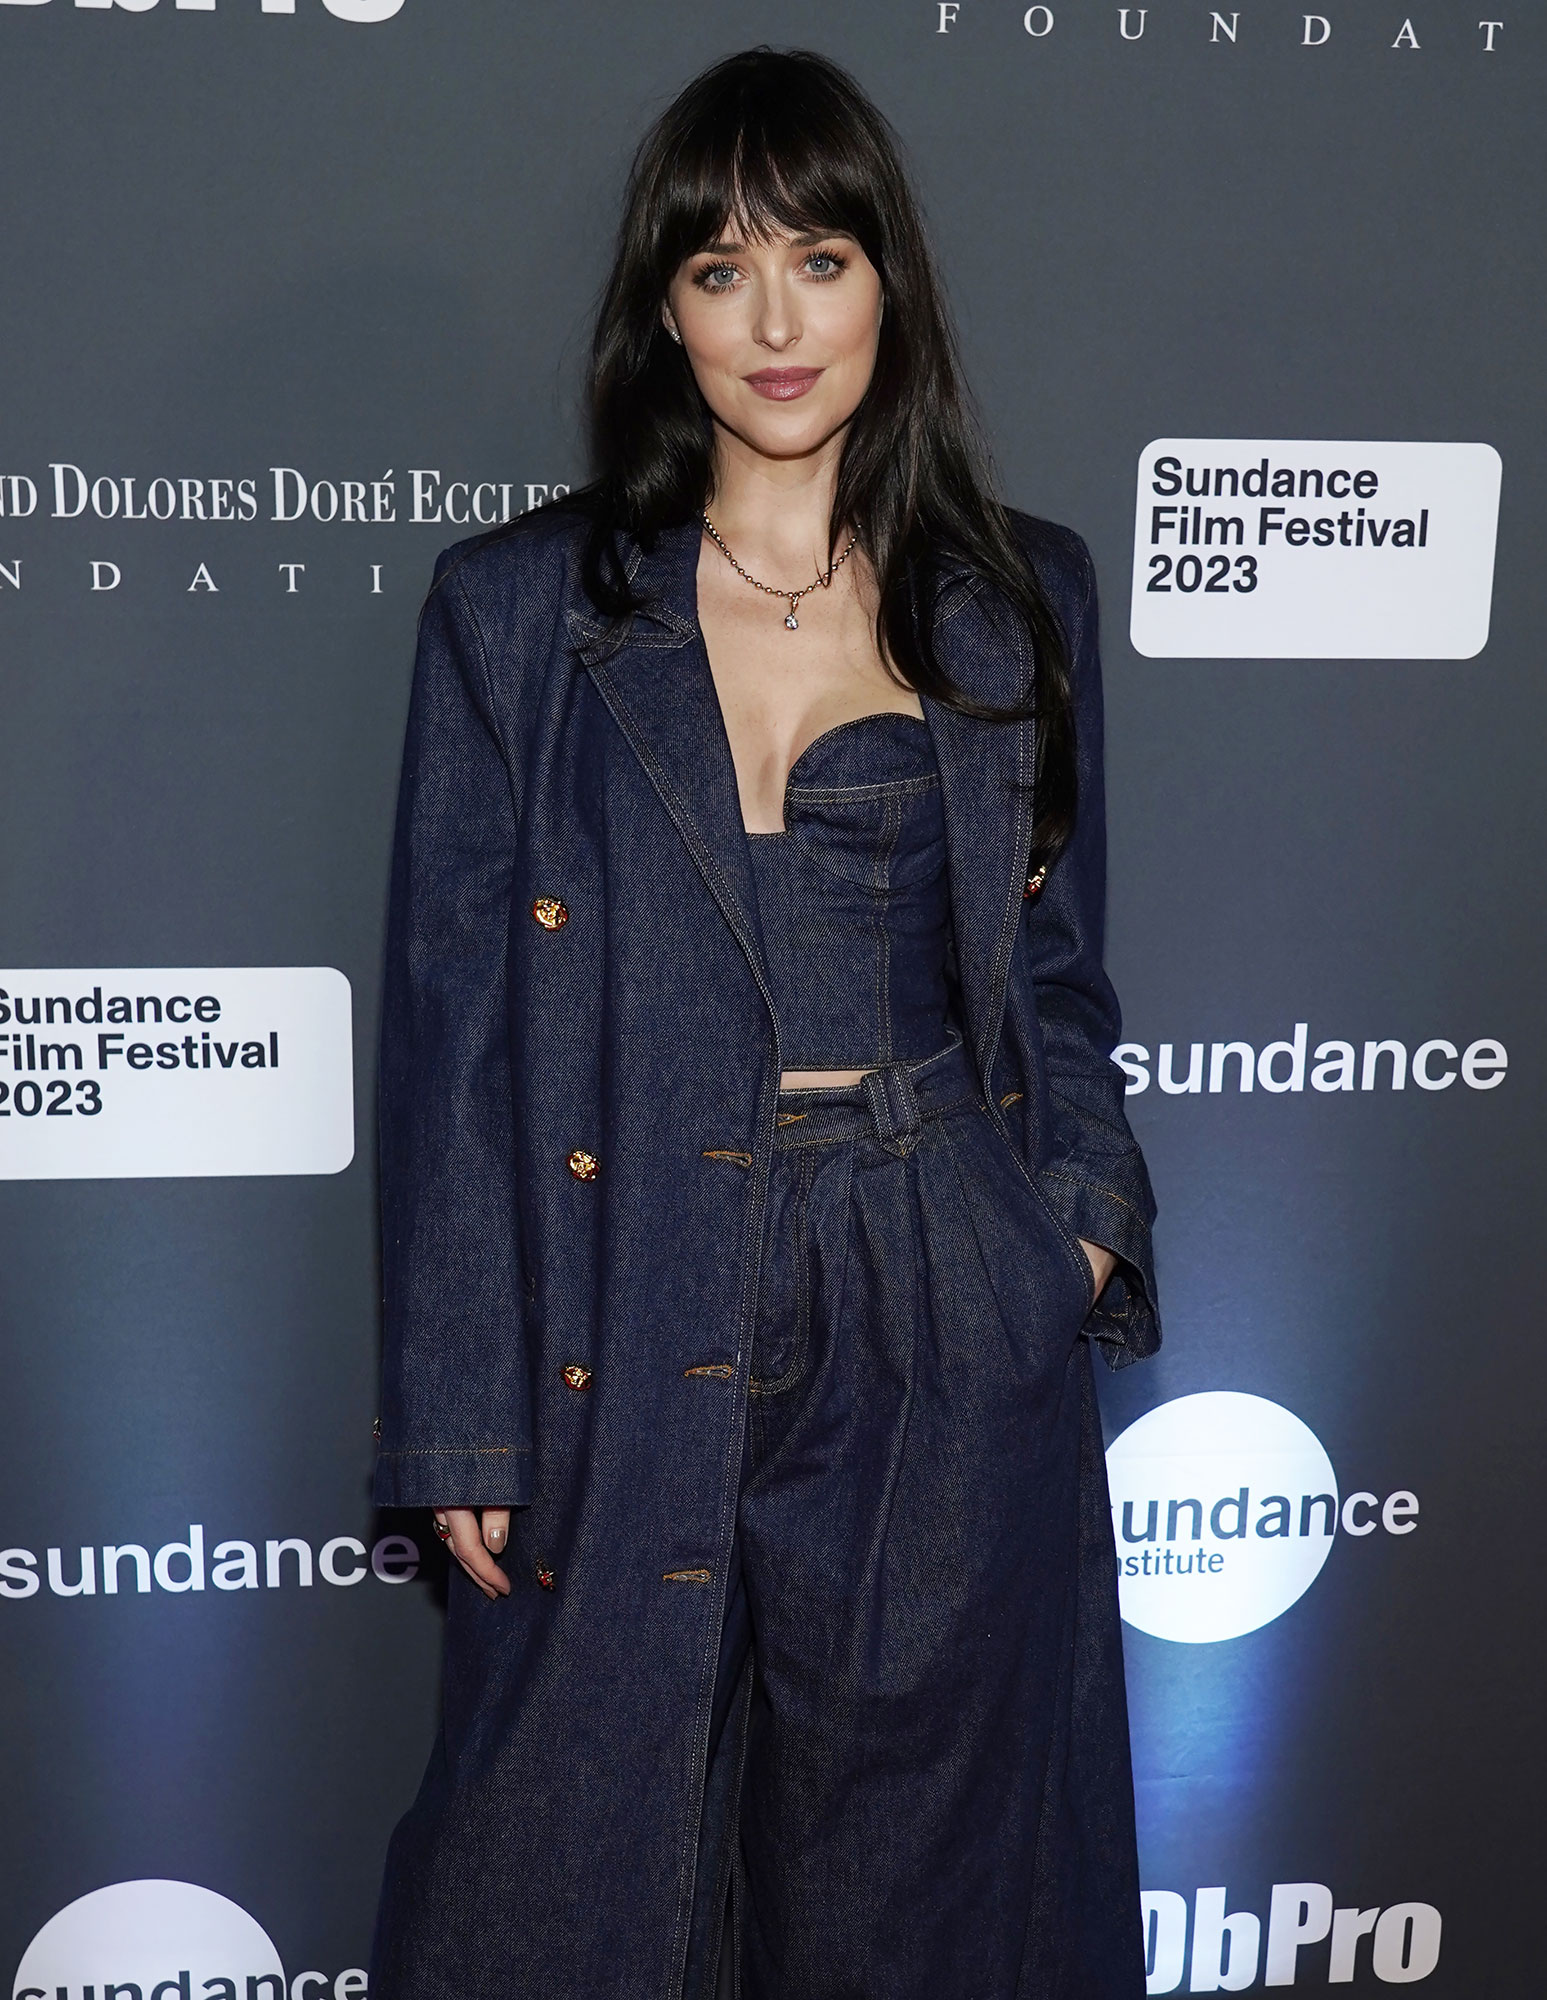 Sofia Coppola attends the 2023 Sundance Film Festival Fairyland